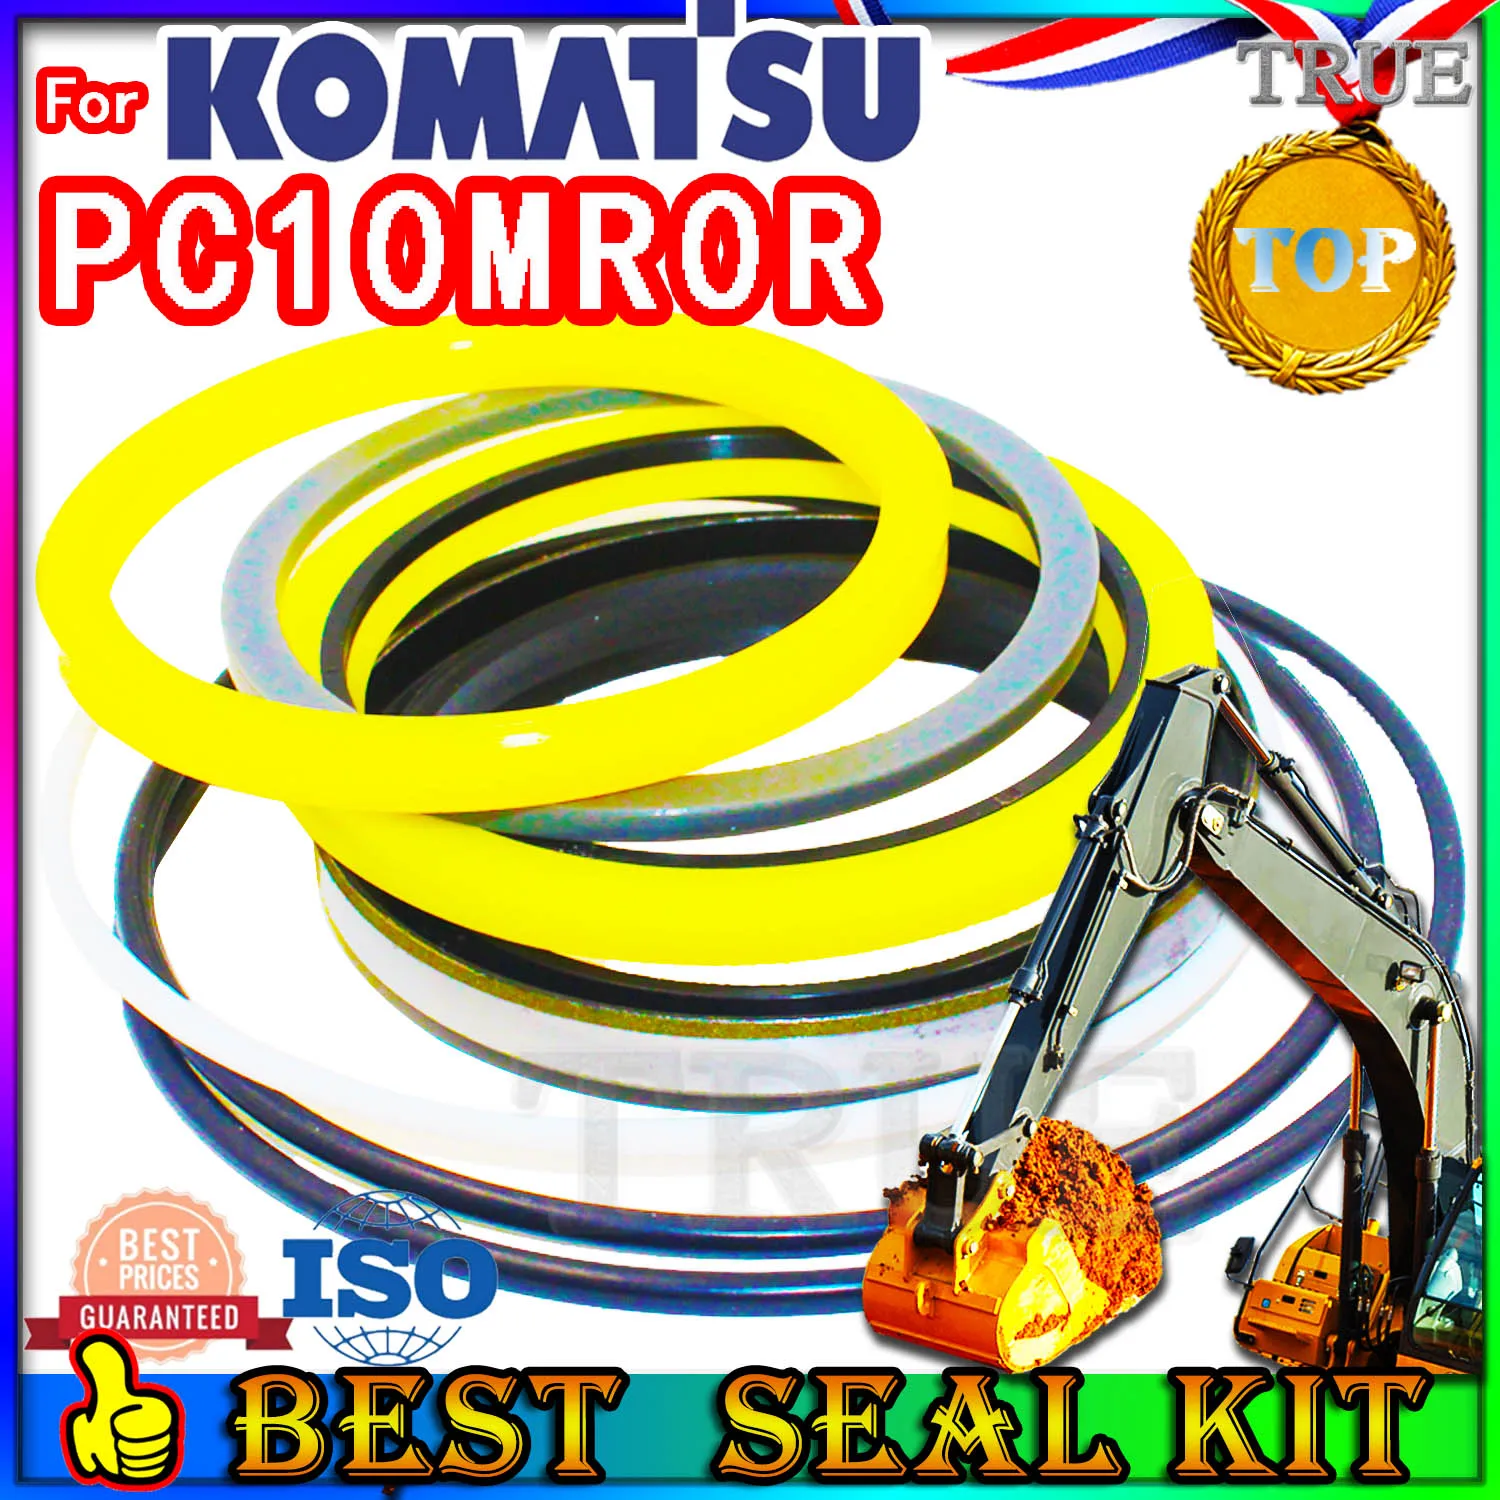 

For KOMATSU PC10MR0R Oil Seal Repair Kit Boom Arm Bucket Excavator Hydraulic Cylinder Bushing FKM High Suppliers Manufacturers